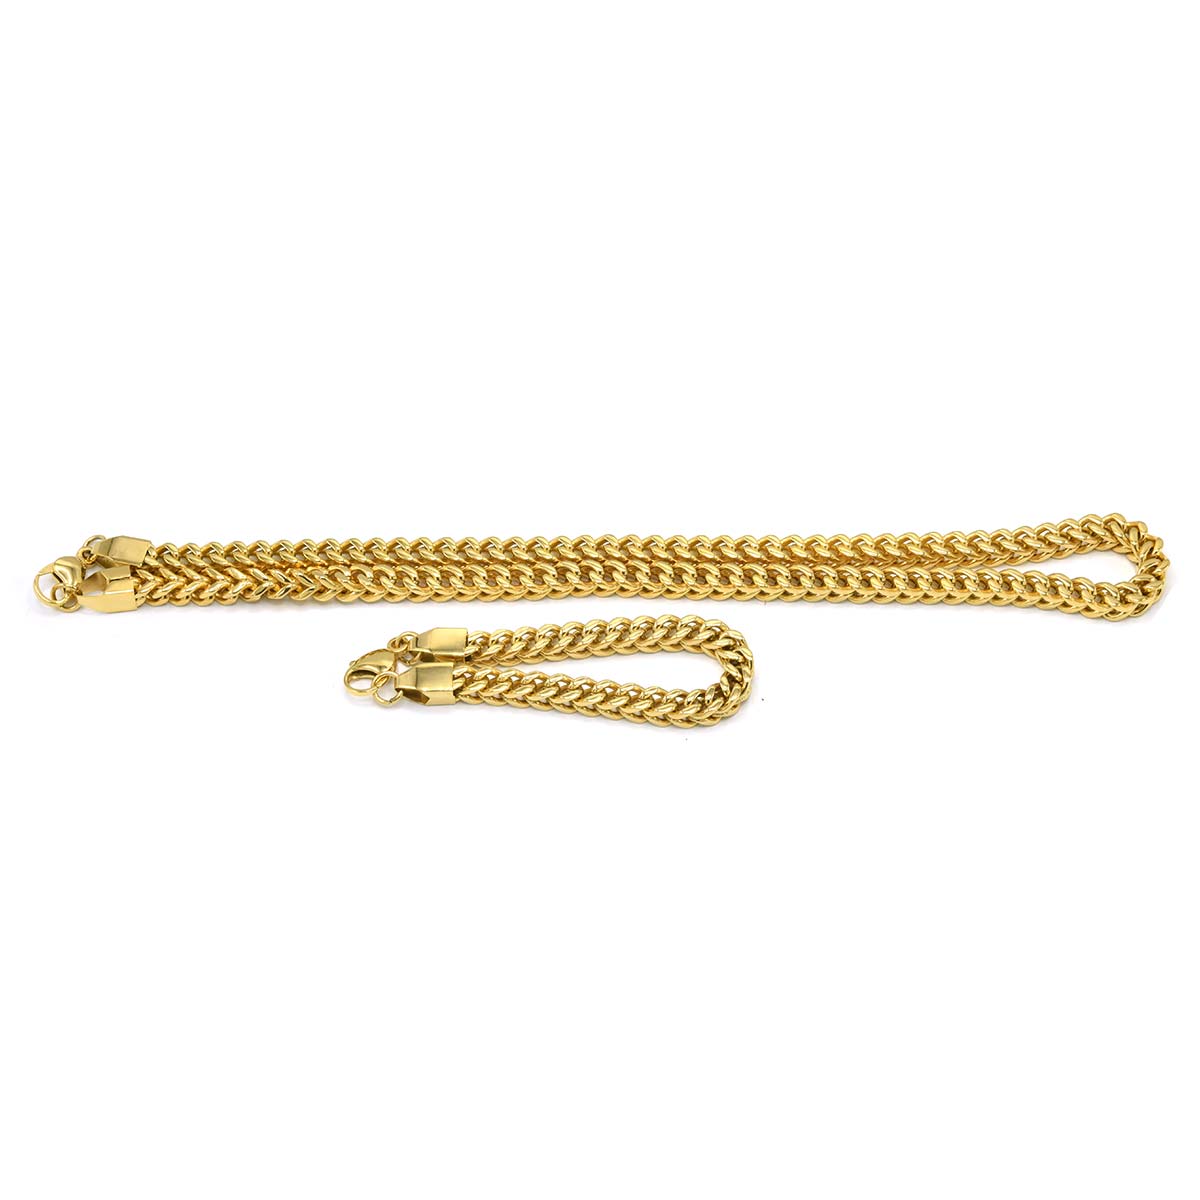 Stainless Steel Chain Bracelet Franco Set 8mm 24 inch chain 8.5 inch bracelet